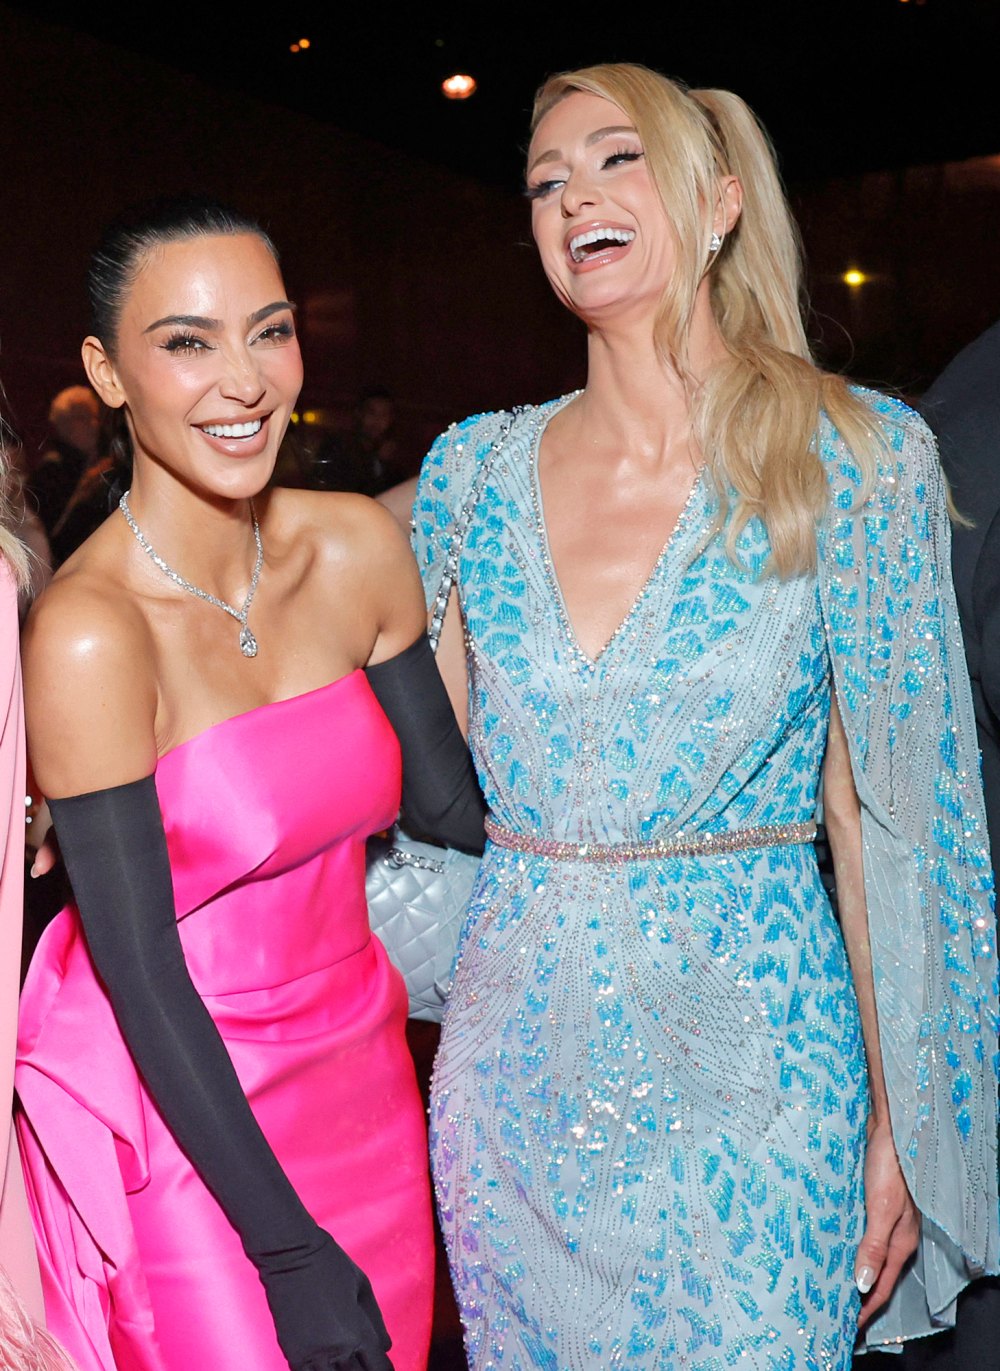 Kim Kardashian and Paris Hilton Go Sledding in Gowns at Epic Holiday Bash